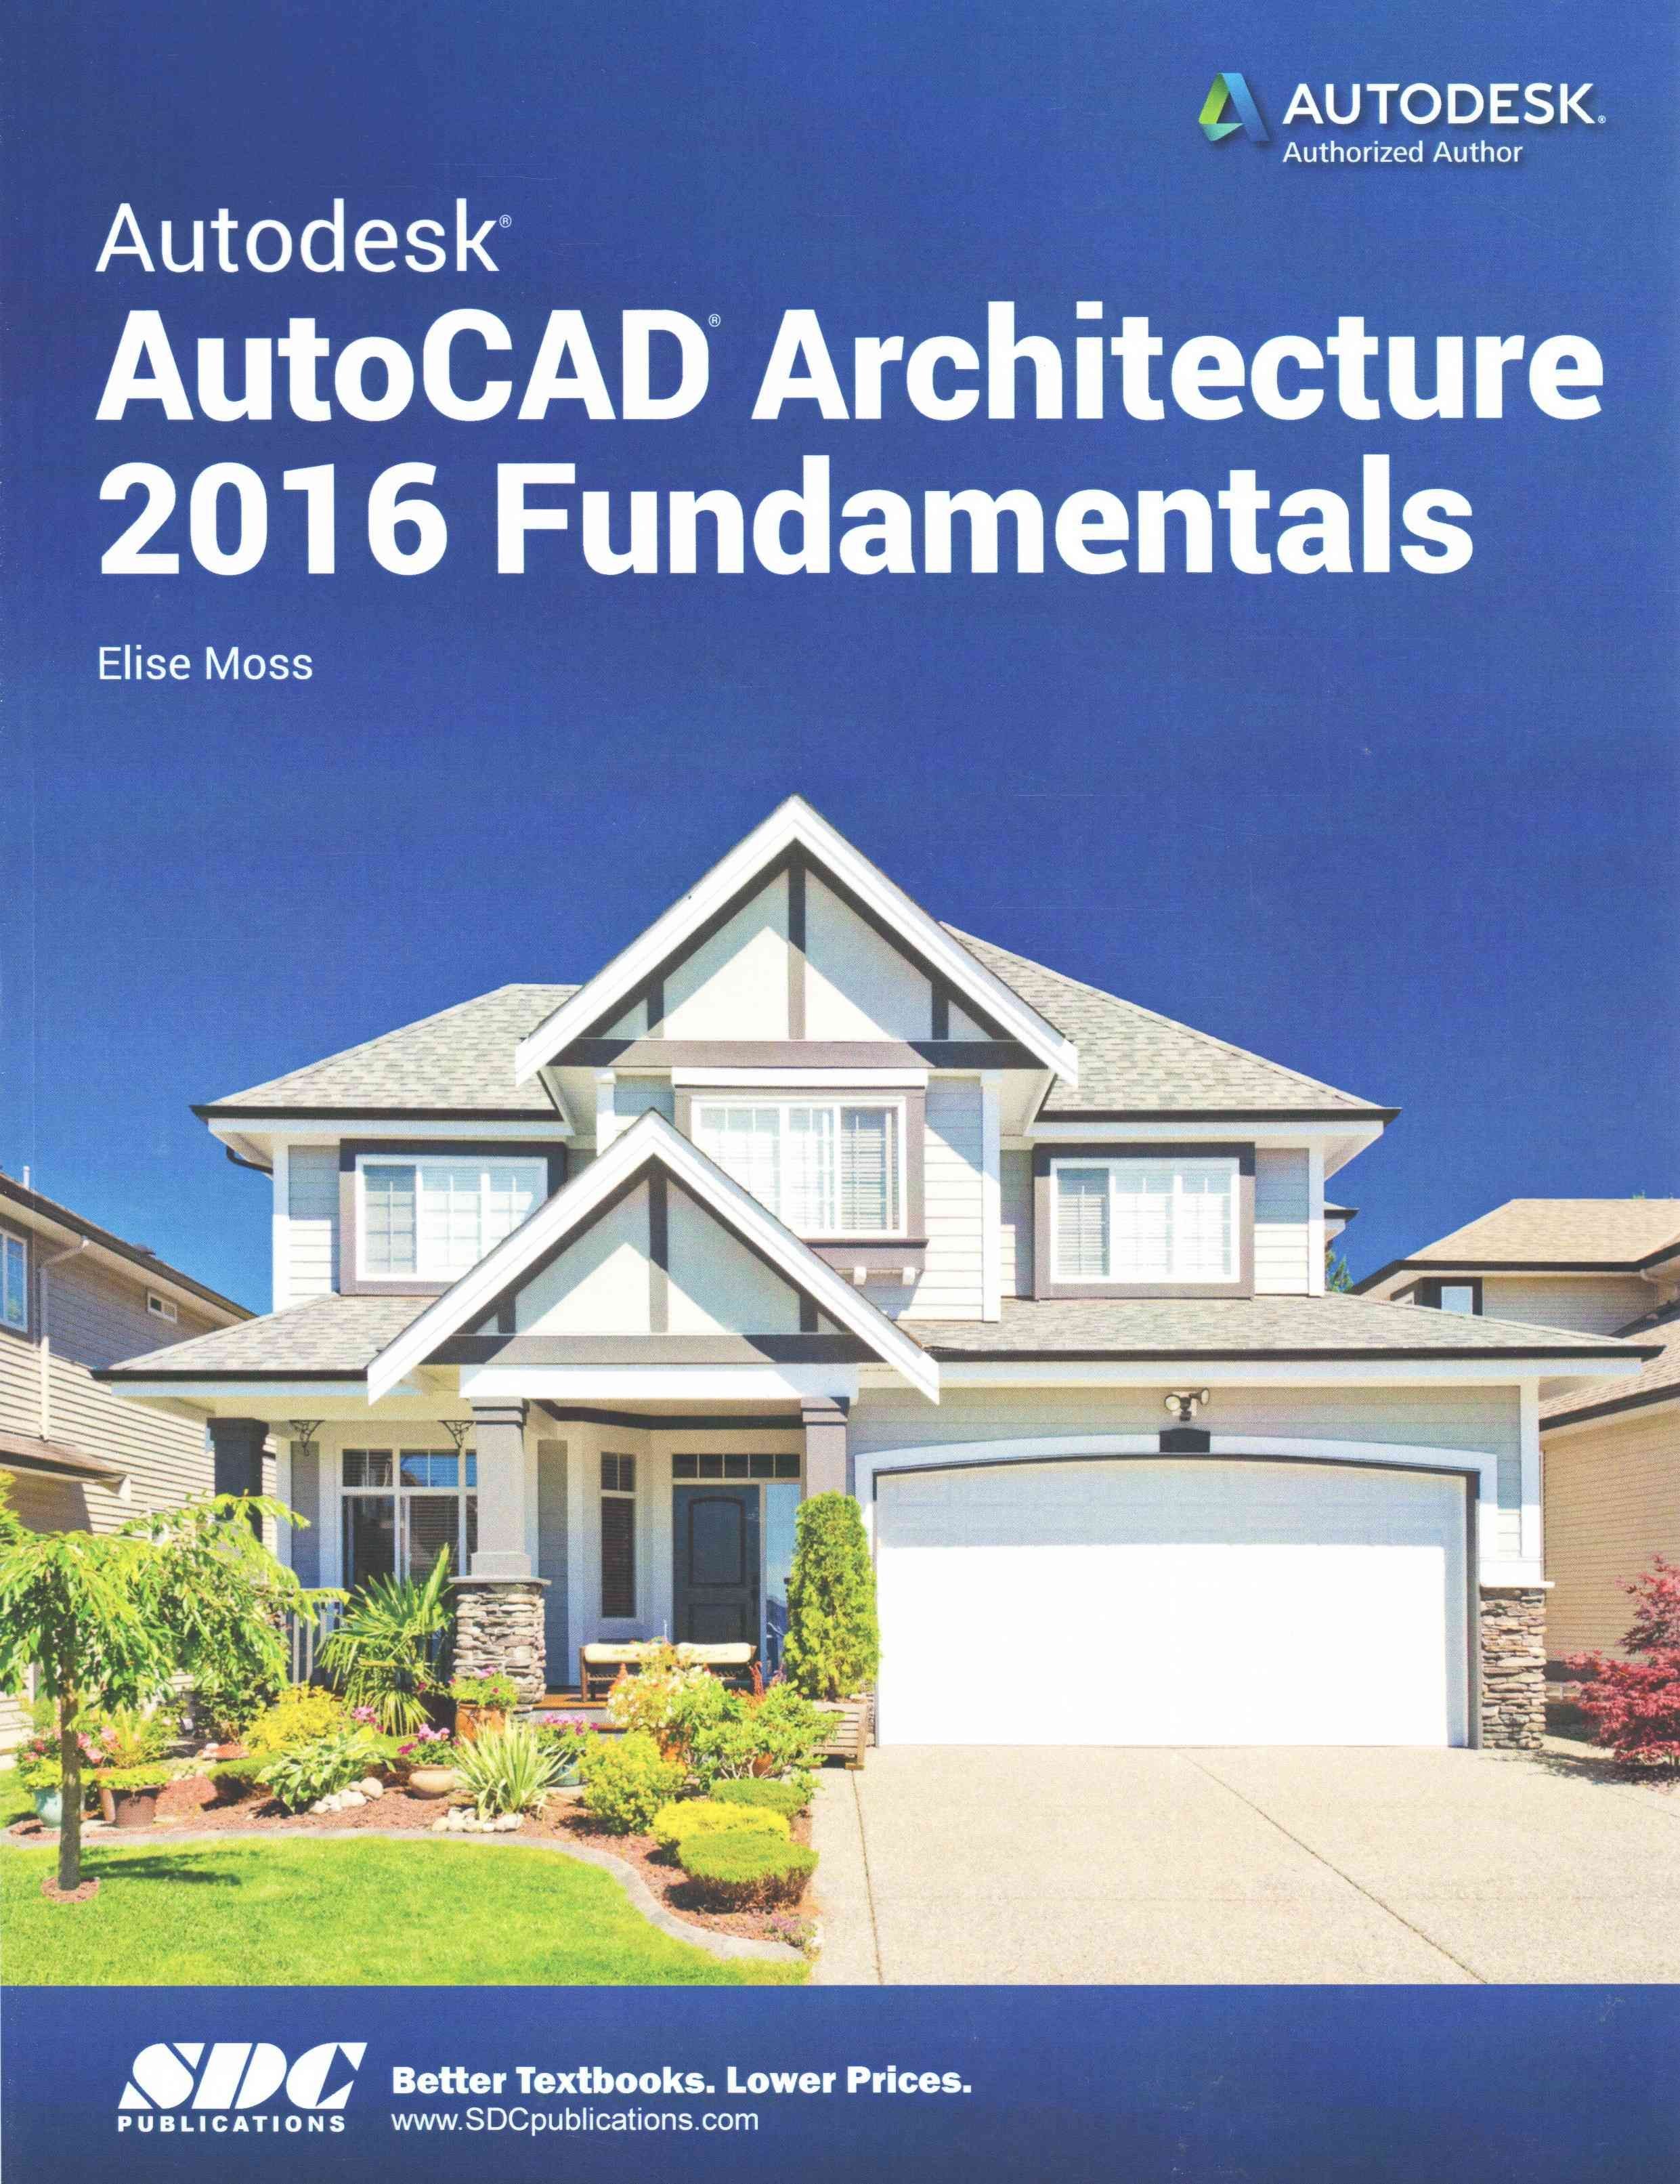 Autodesk AutoCAD Architecture 2016 Fundamentals